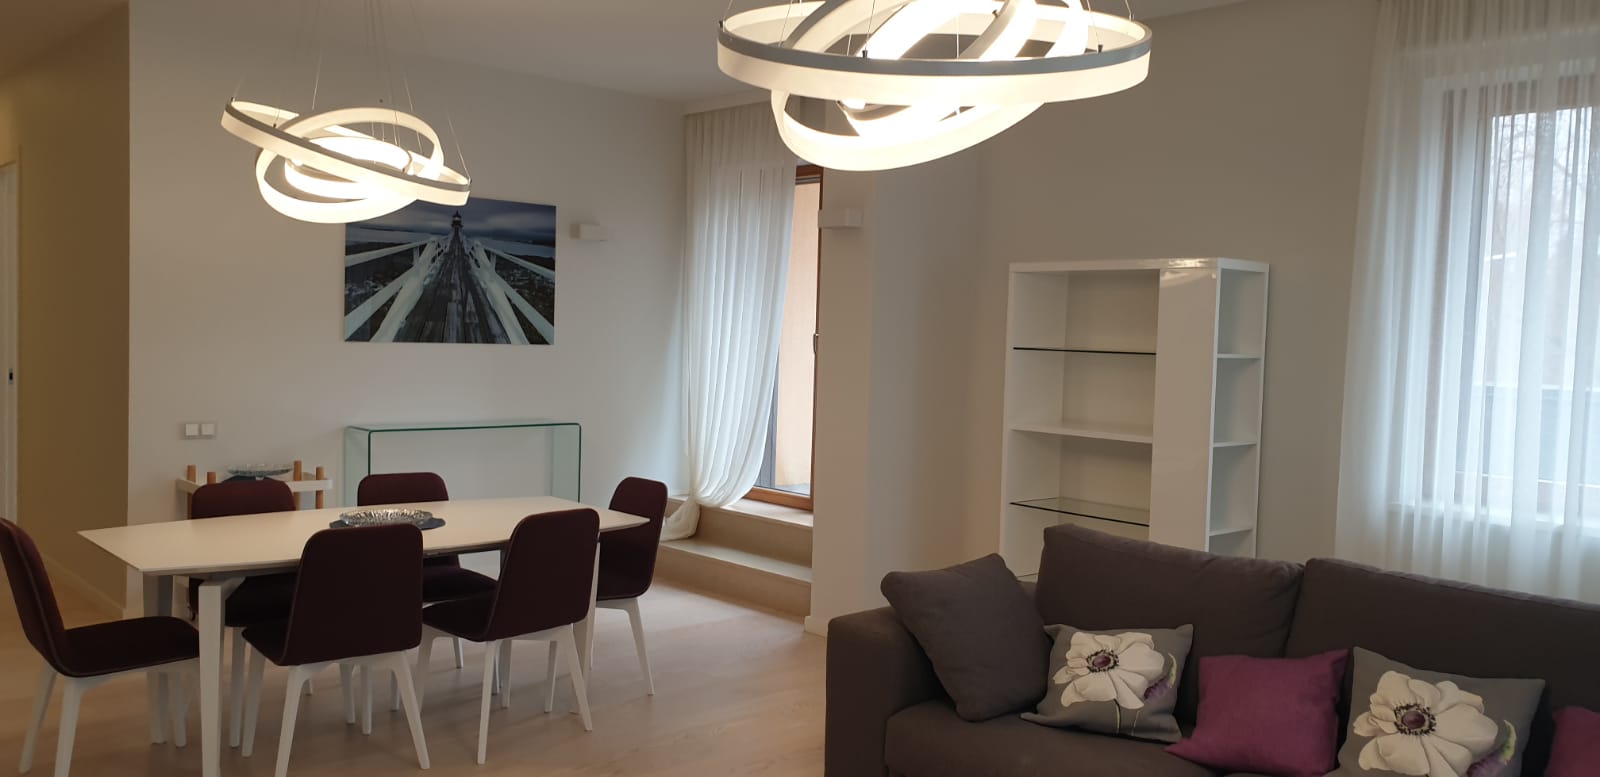 Large 3-room apartment for rent in Bulduri